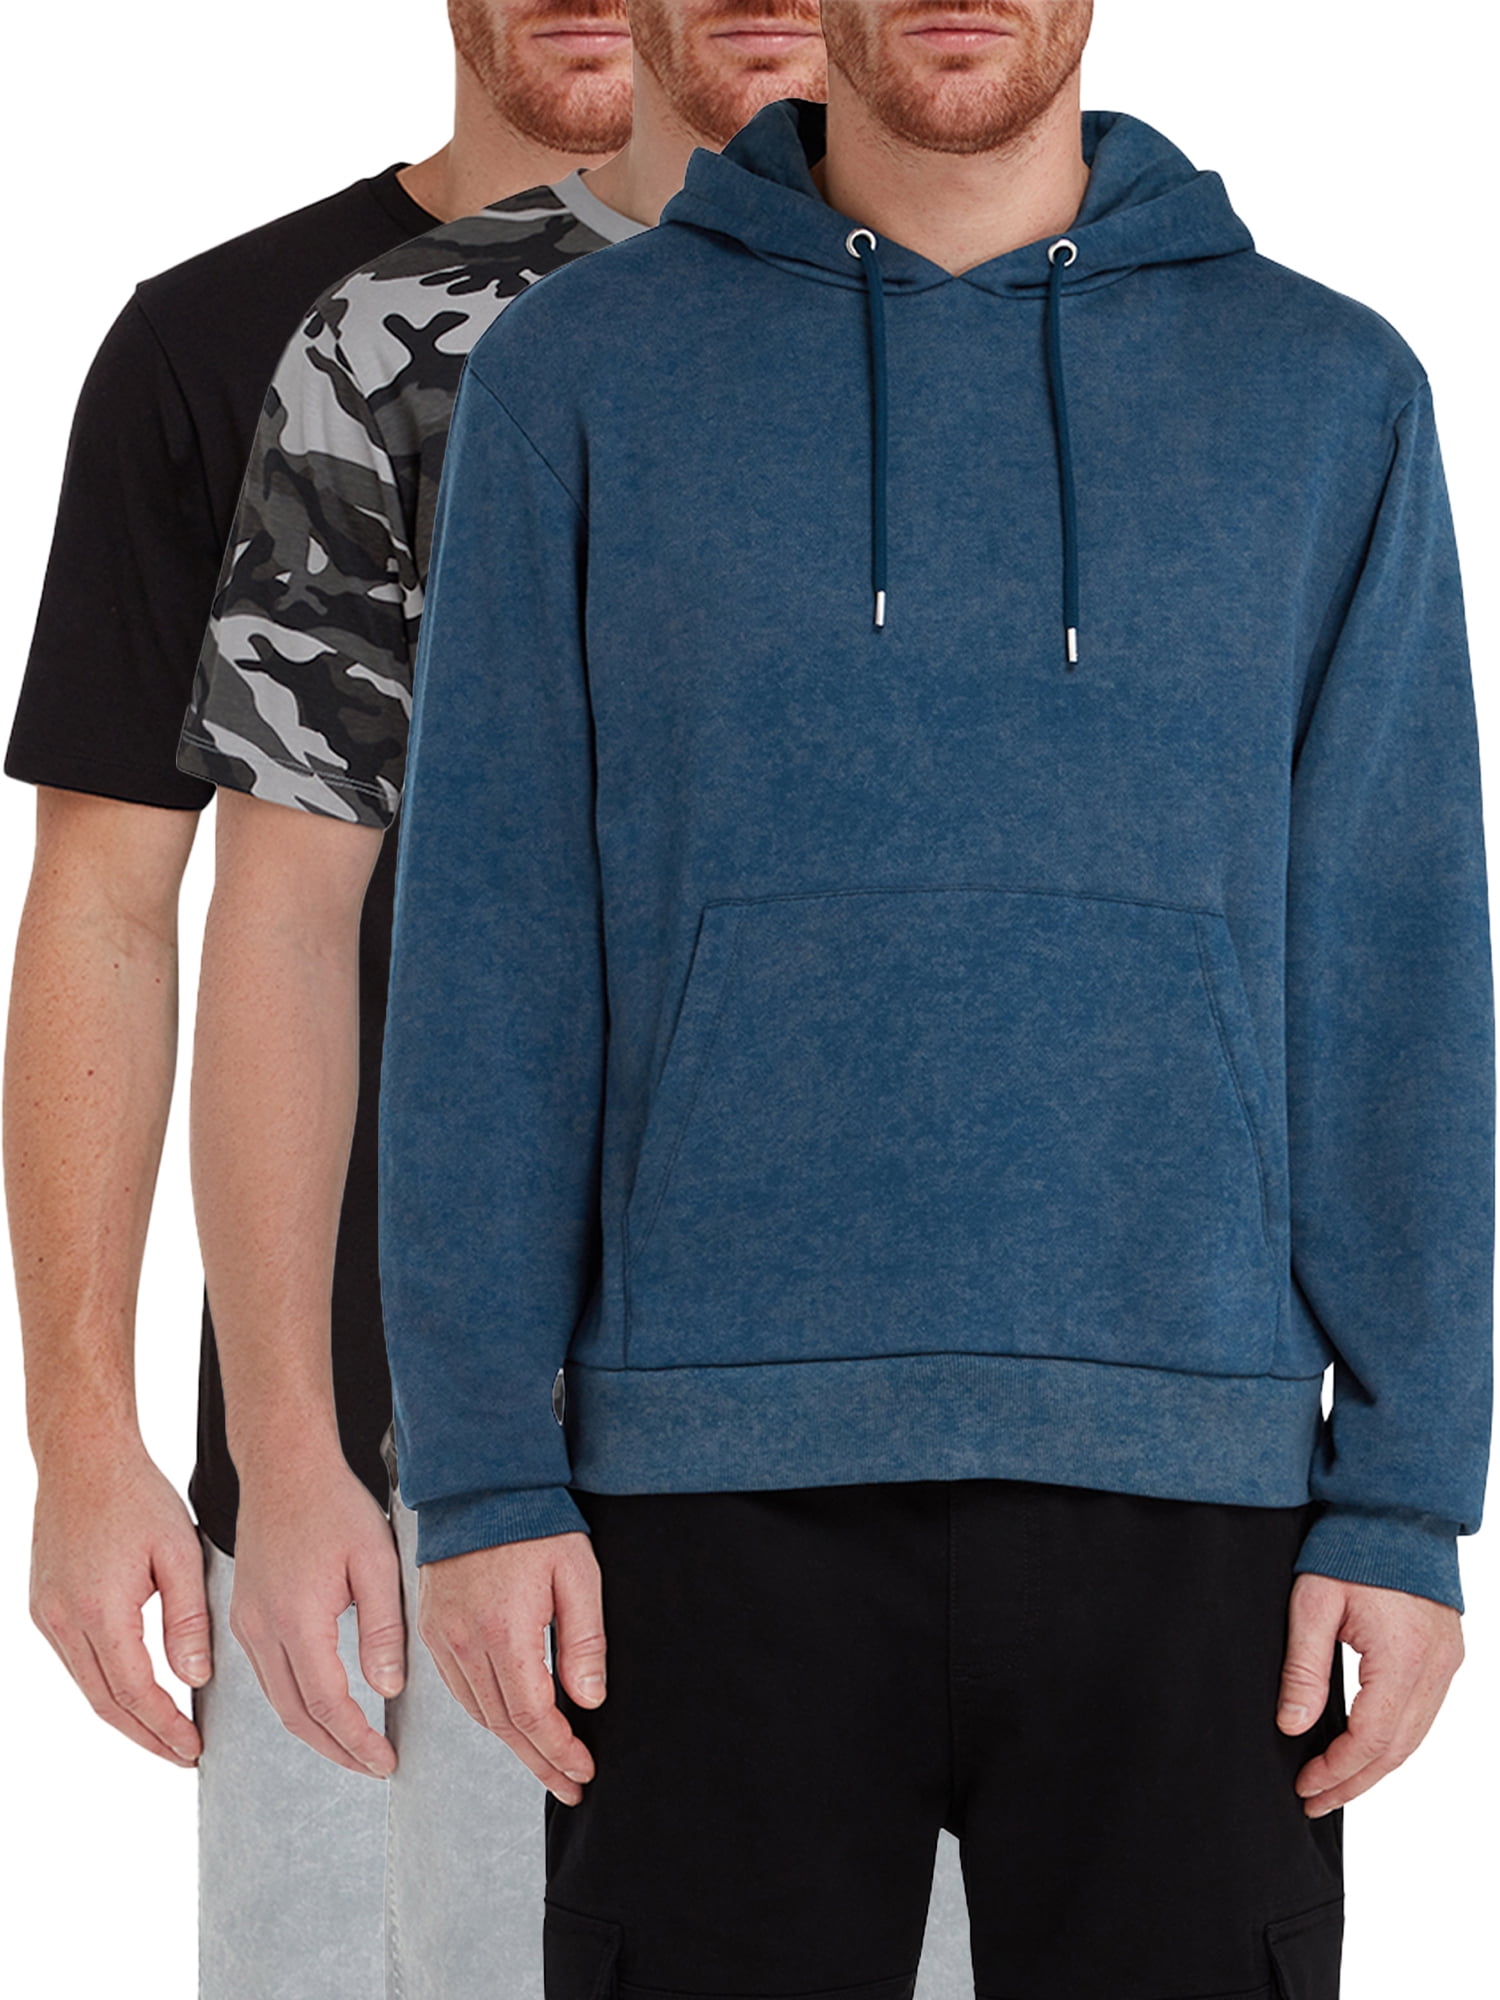 Match Box Twenty Logo Mens Hoodie Trend 3D Printed Pullover Sweatshirt with Pockets Long Sleeve tee